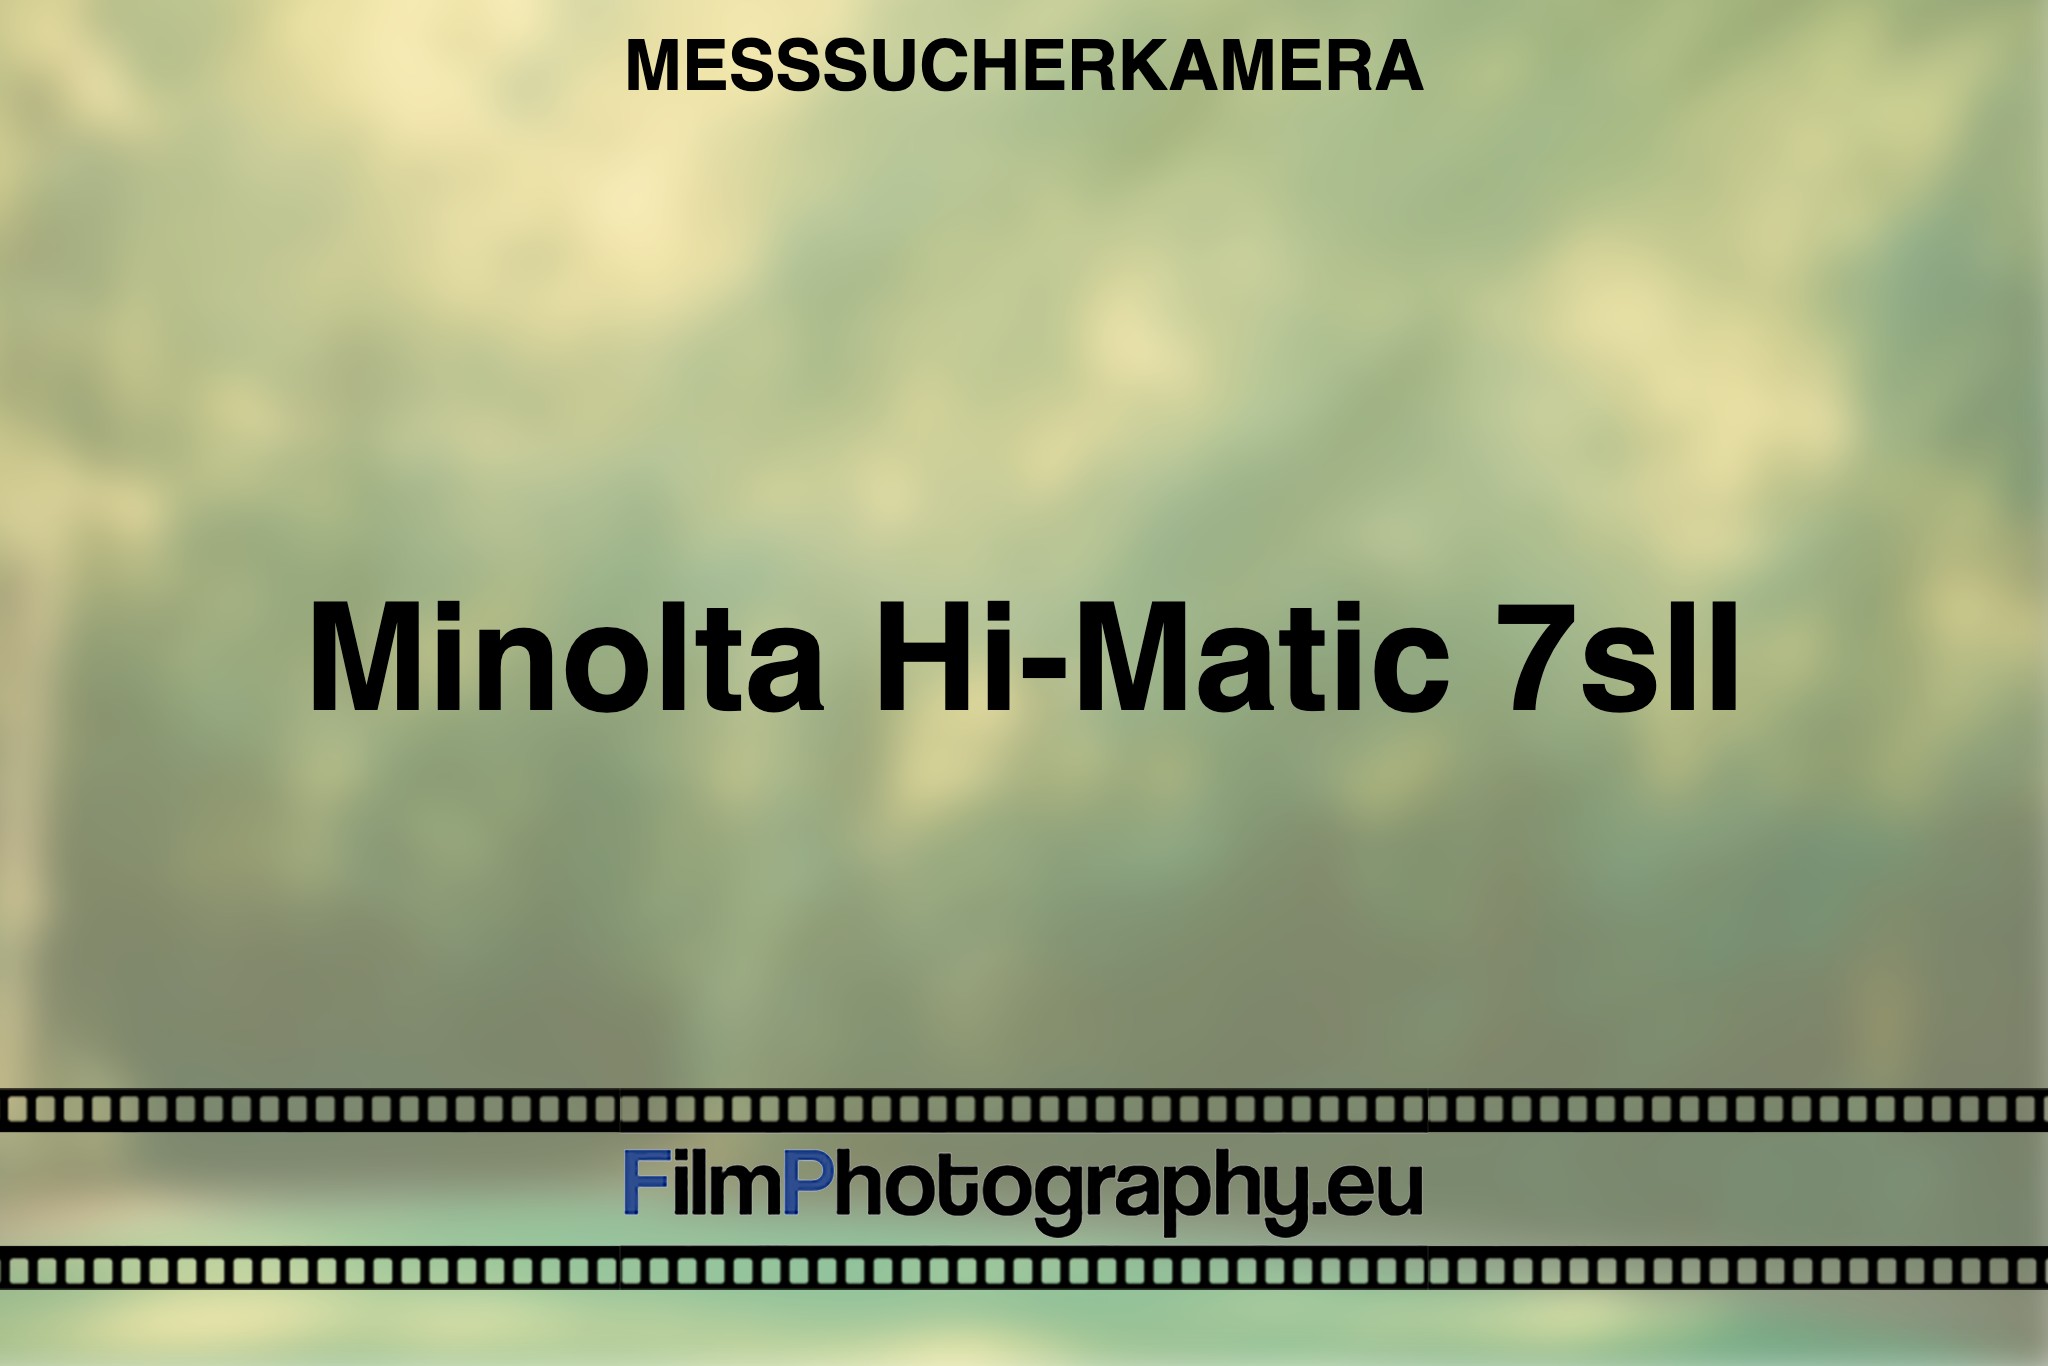 minolta-hi-matic-7sii-messsucherkamera-bnv